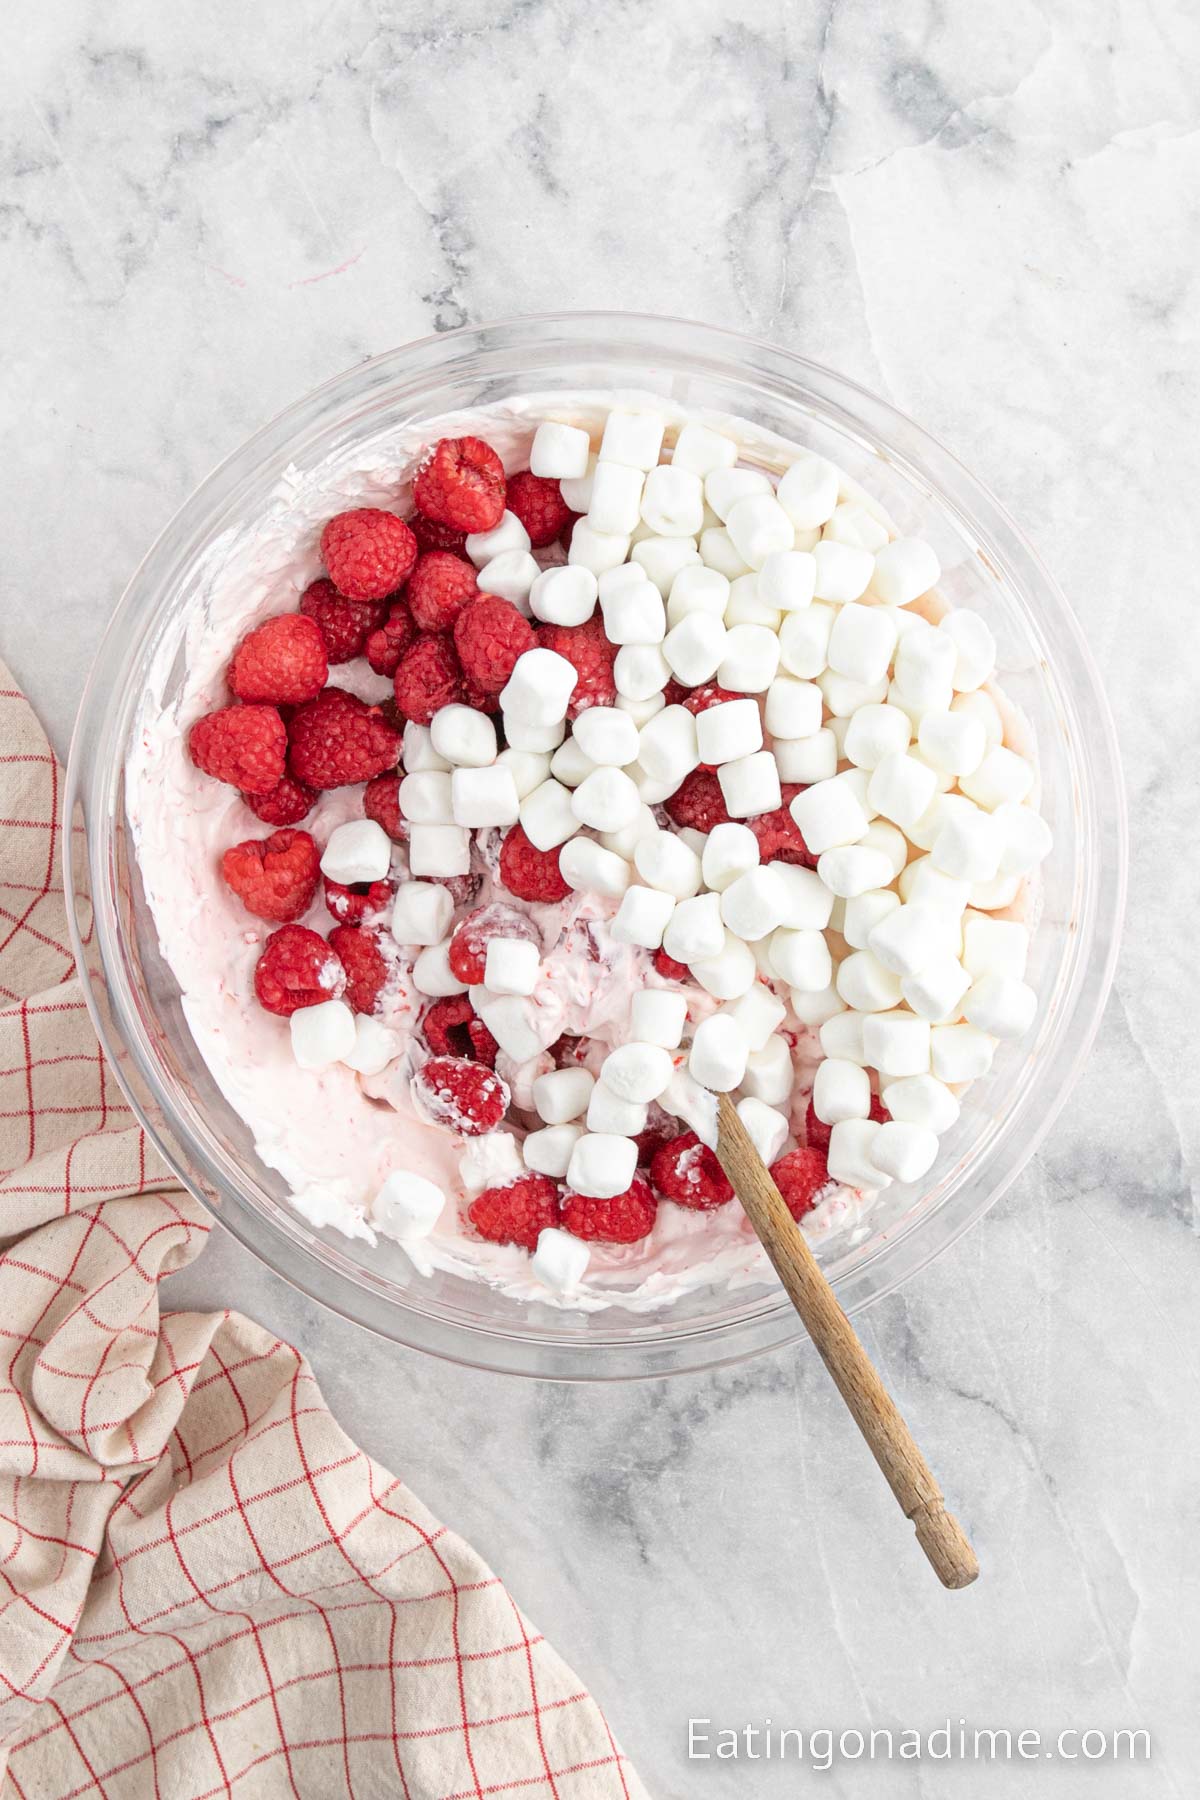 Stir in fresh raspberries and mini marshmallows into the jello mixture